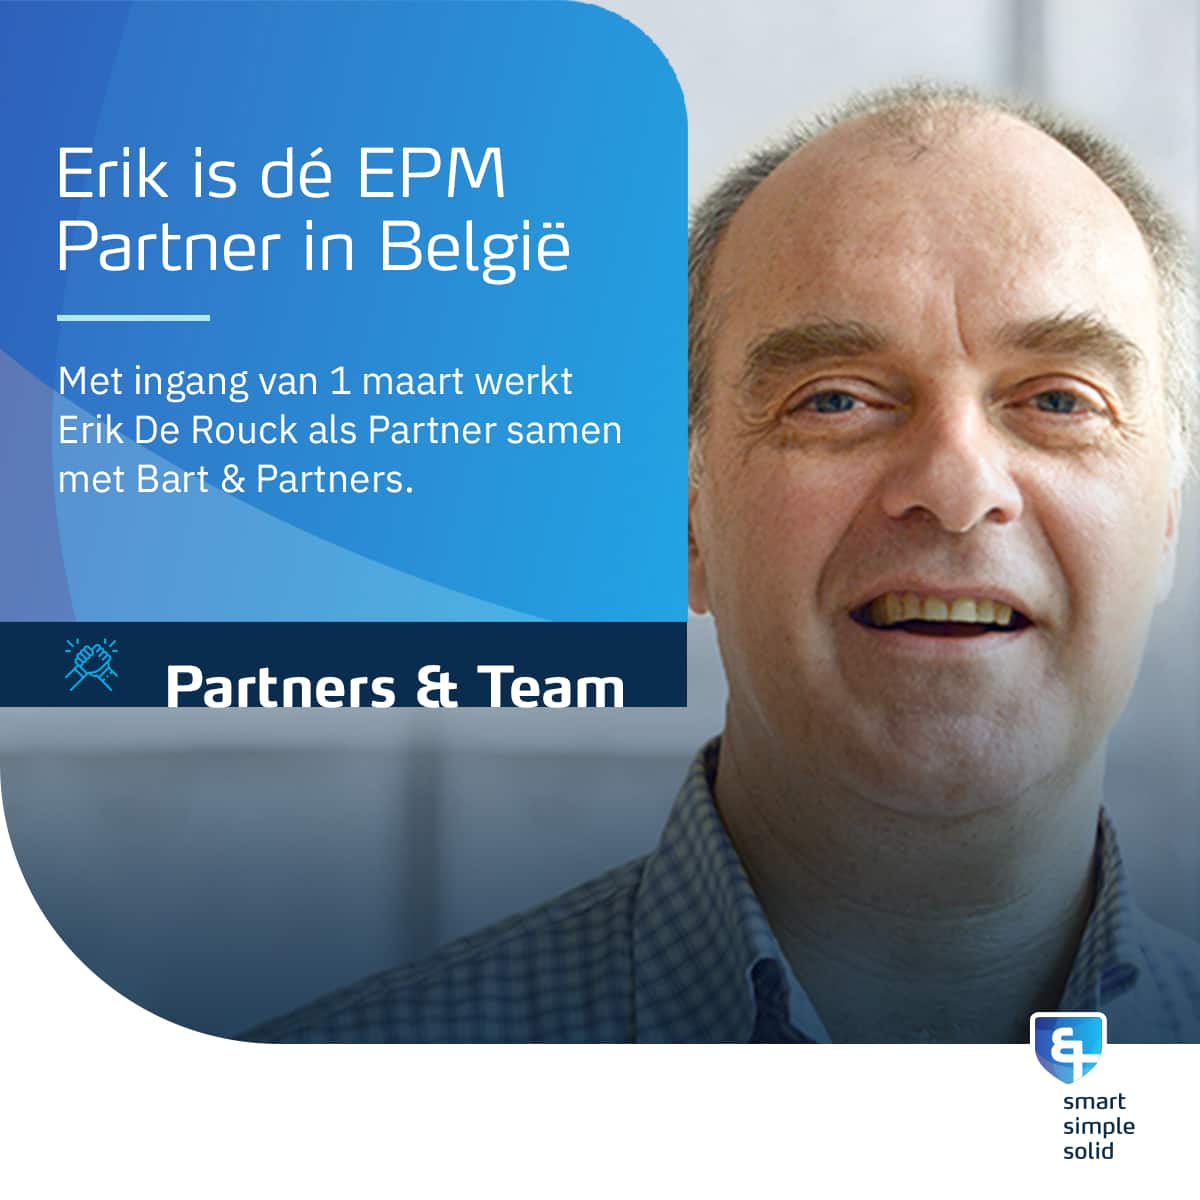 Erik is dé EPM Partner in België